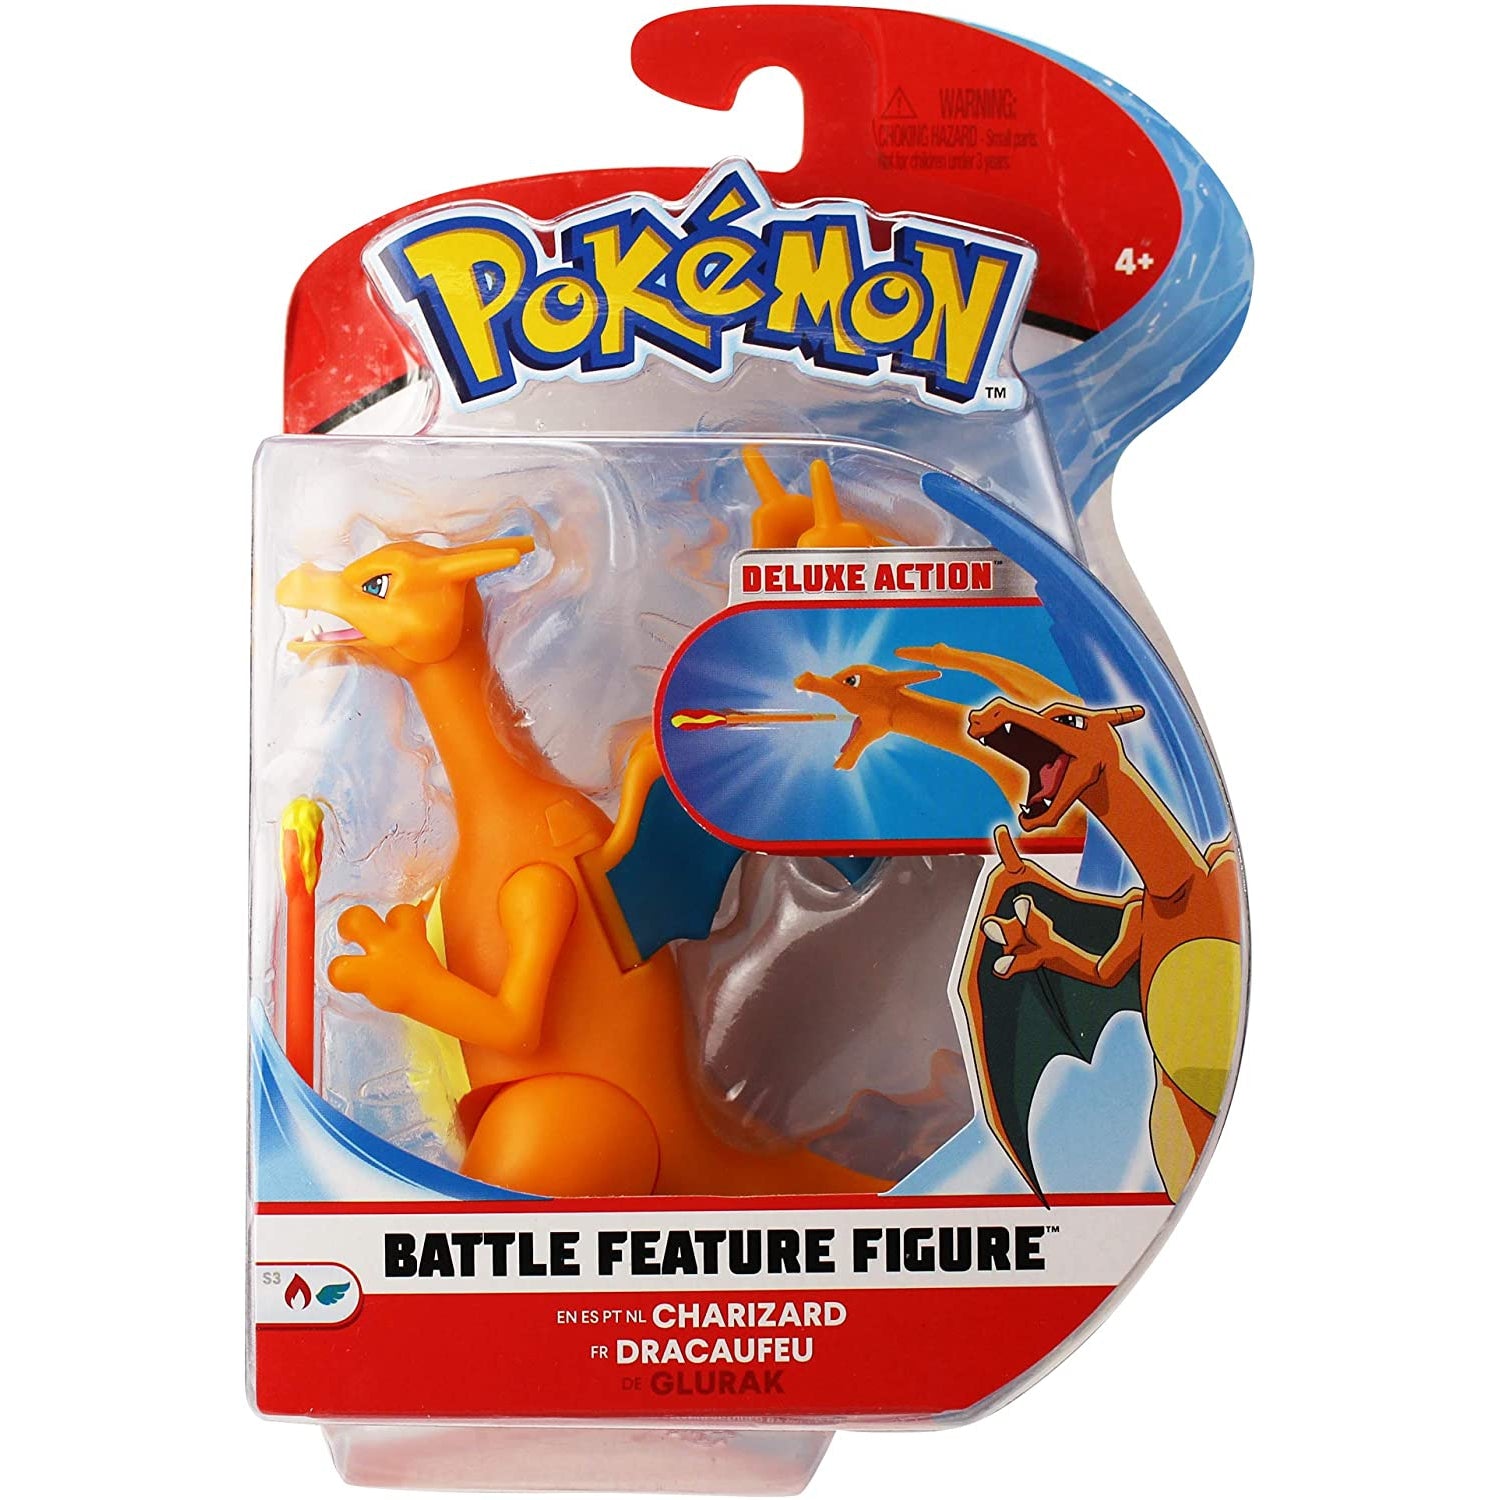 Pokemon Battle Feature Figure - Charizard